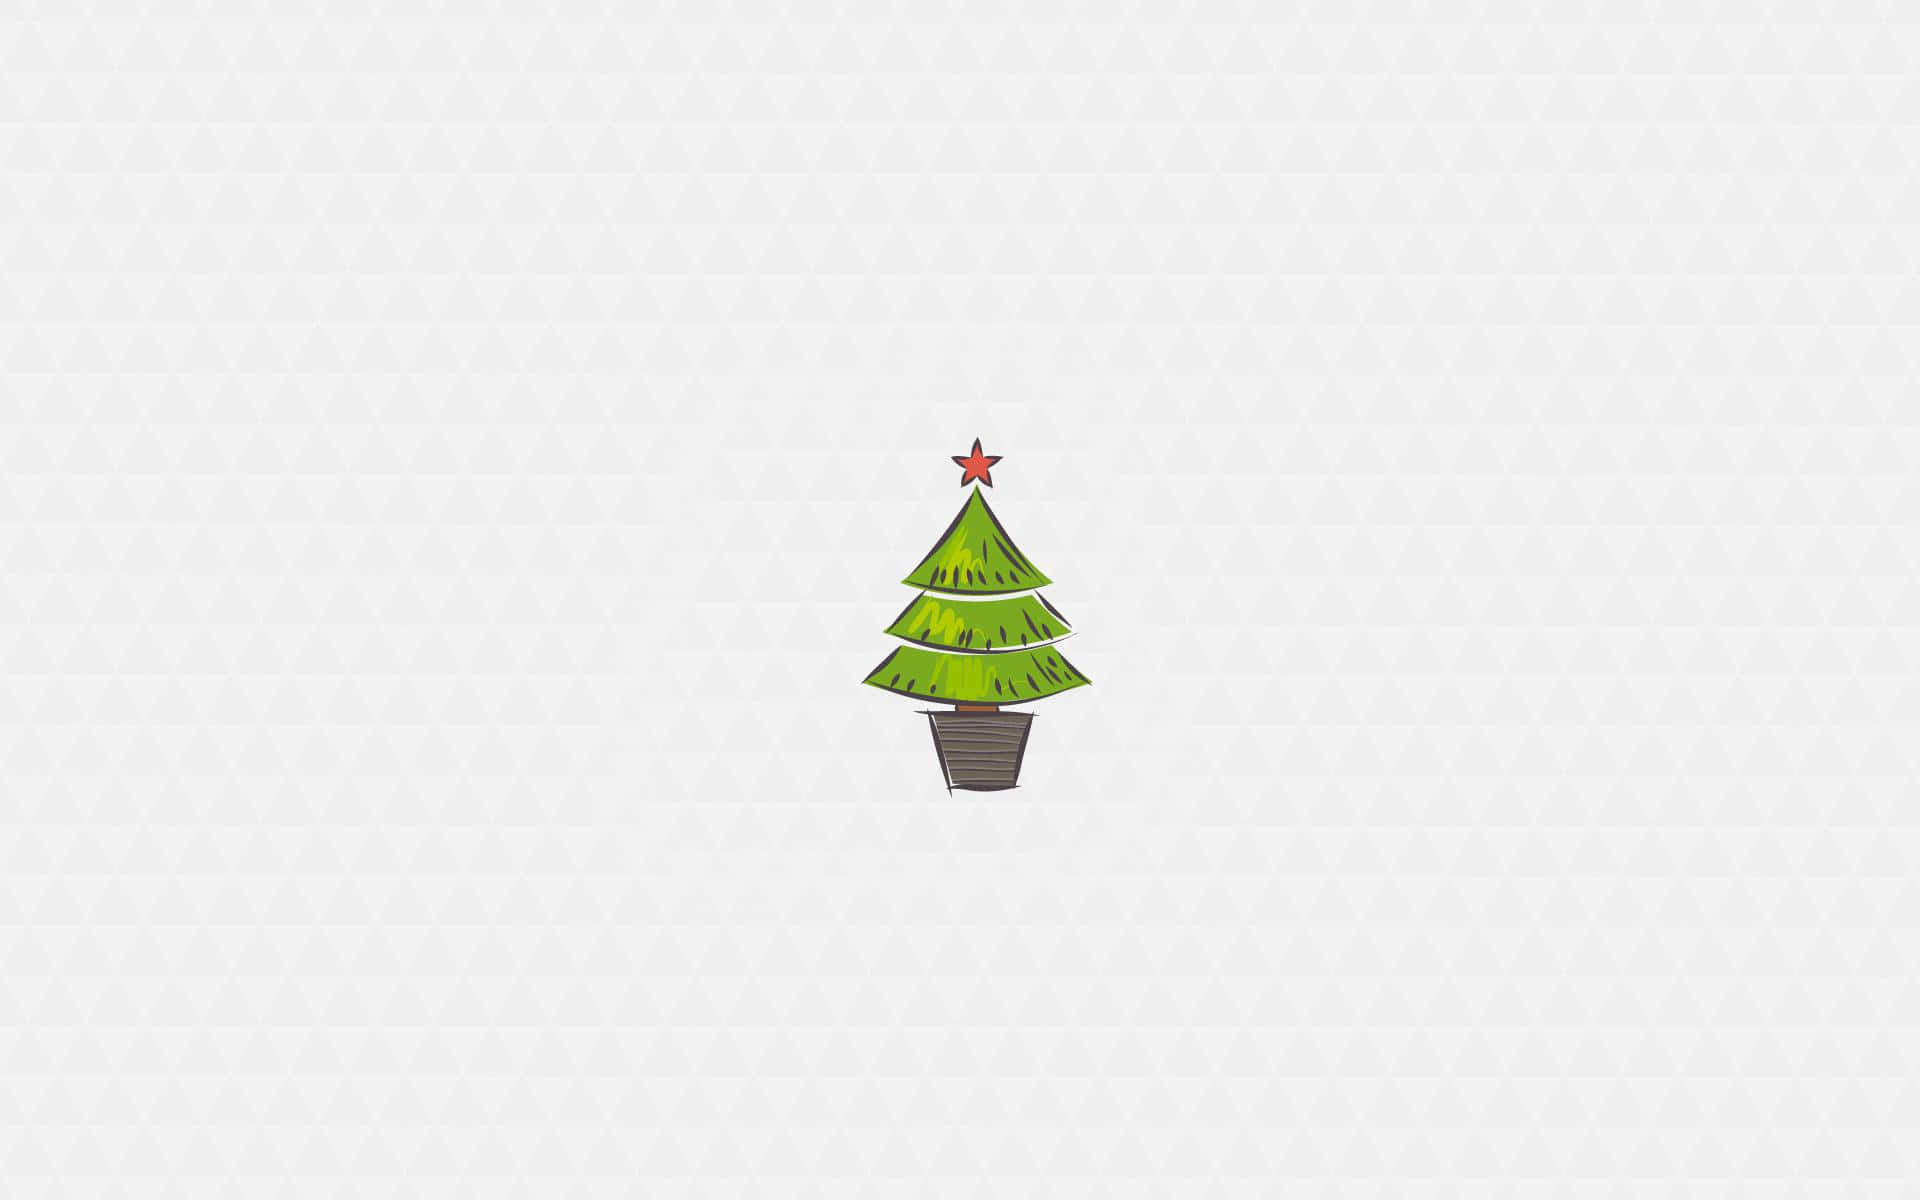 December Desktop with a Minimalist Christmas Theme Wallpaper